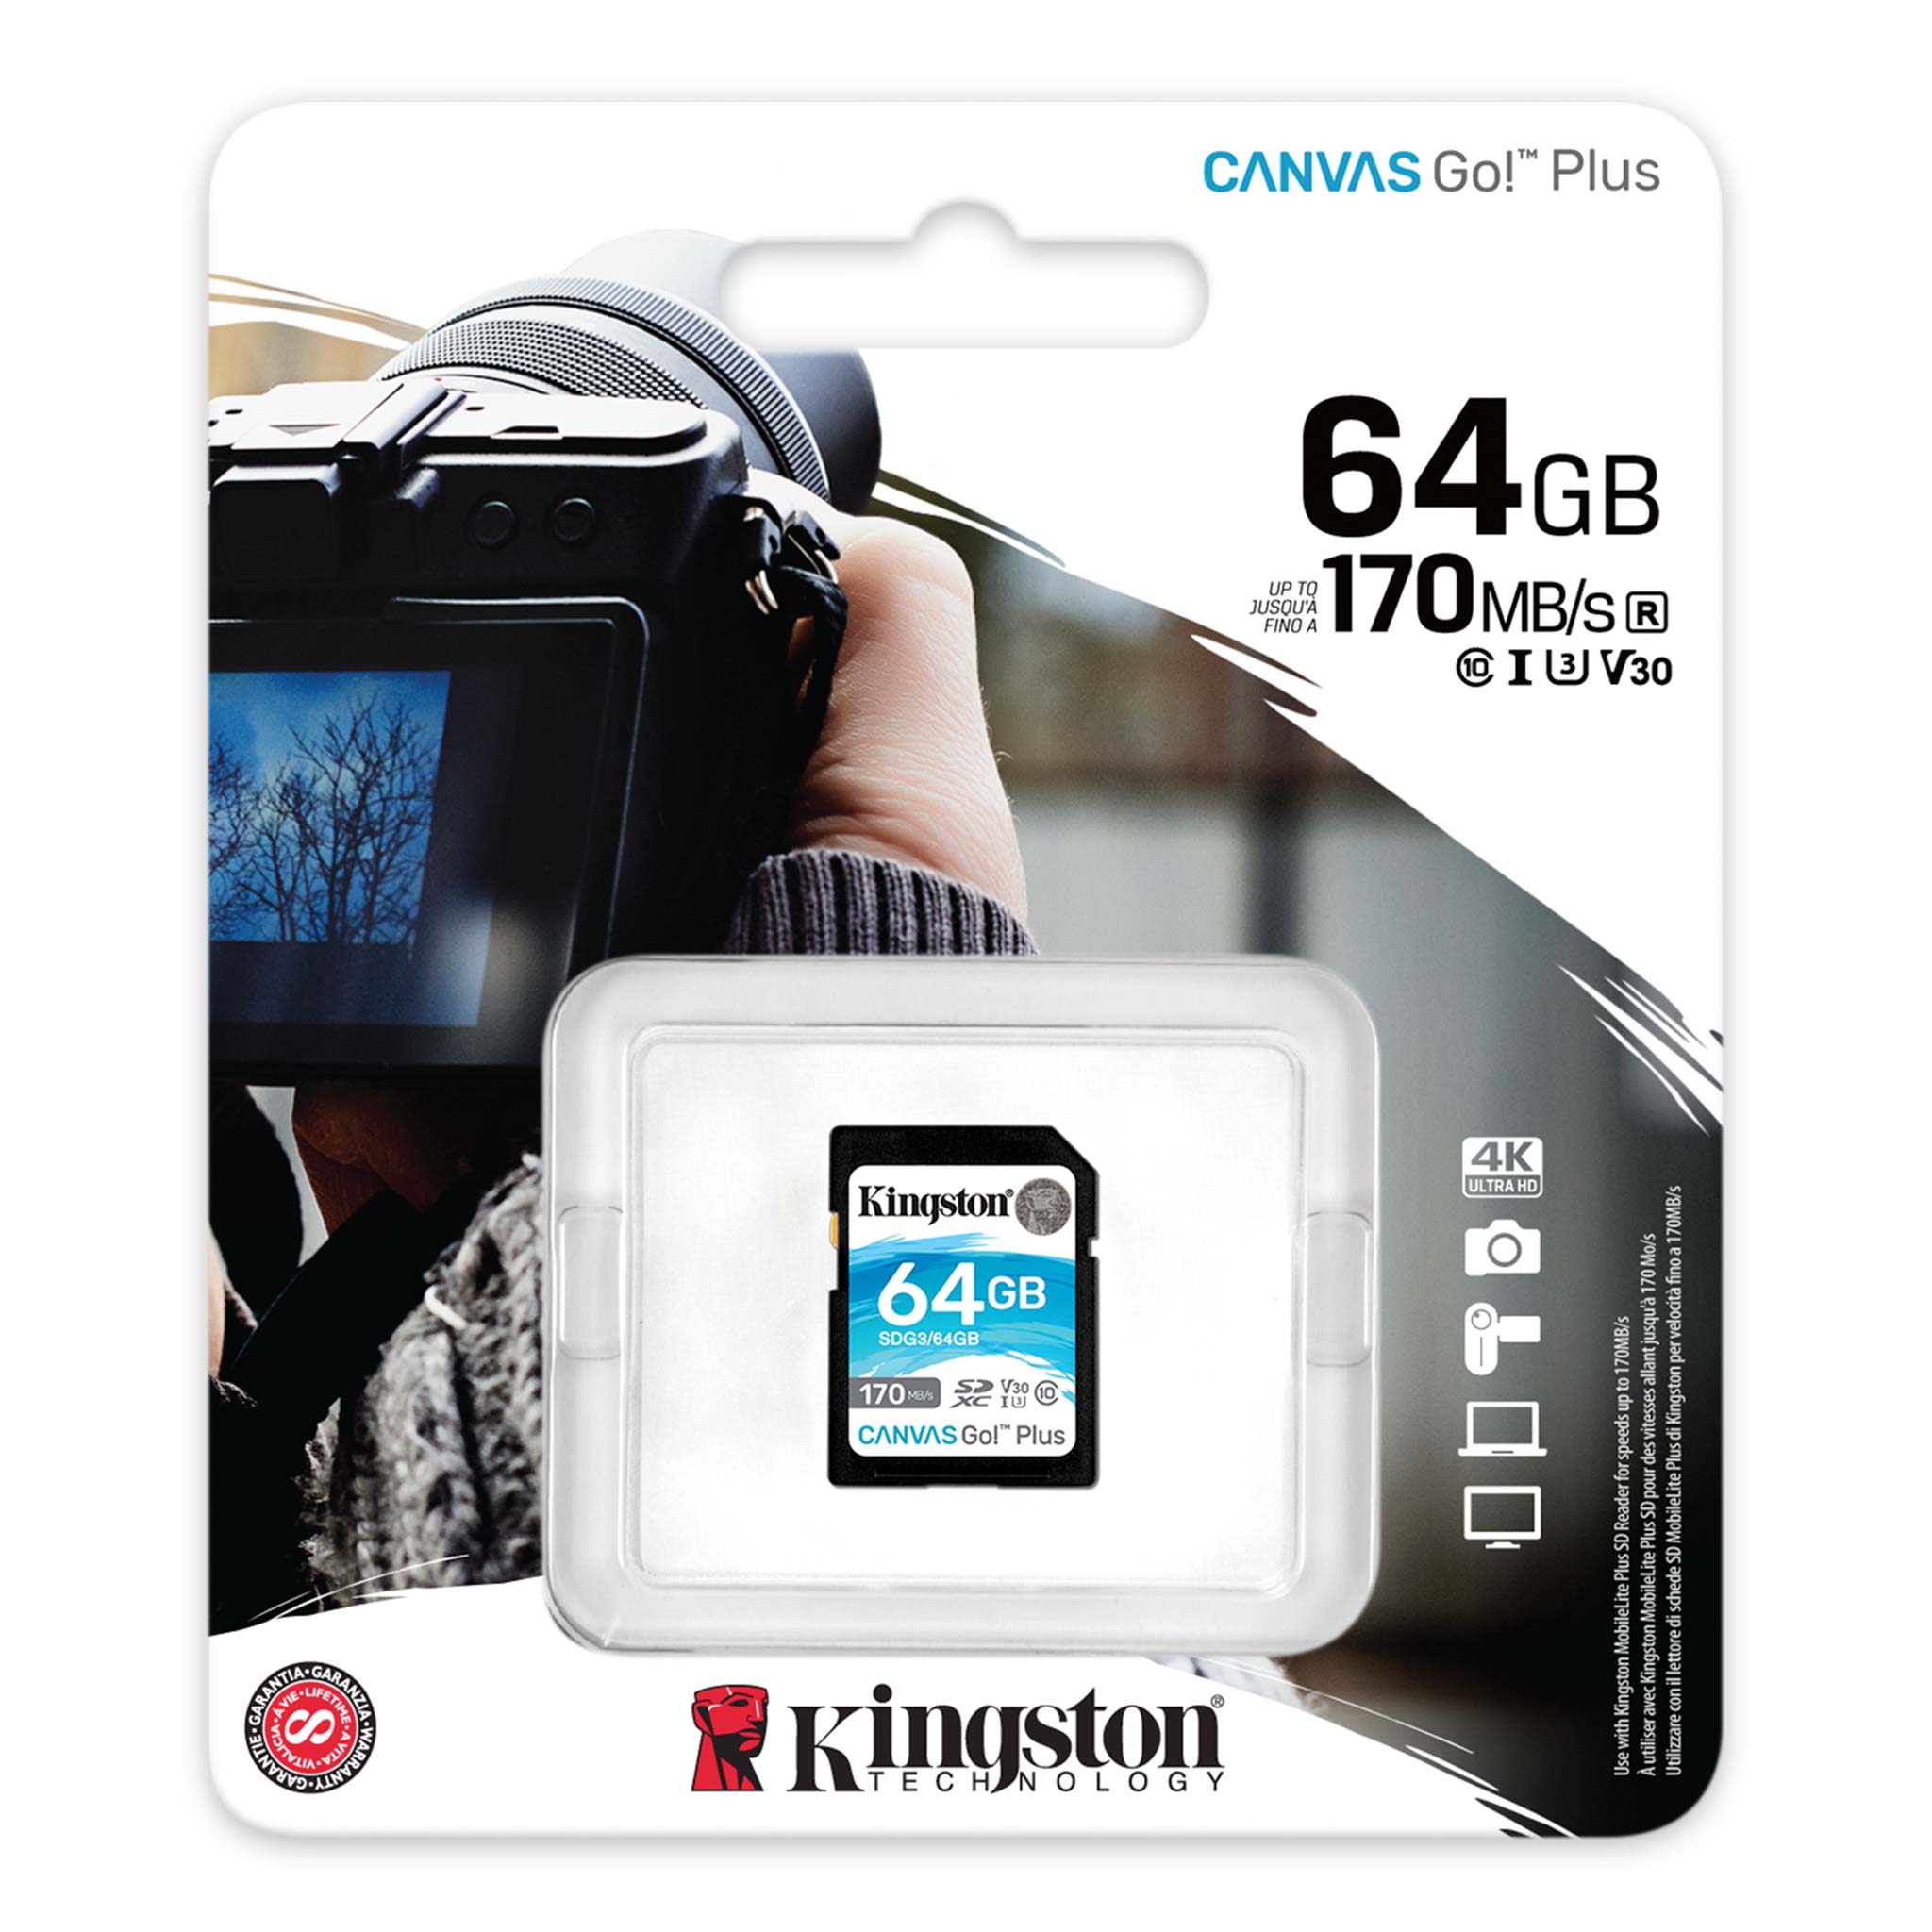 100MBs Works with Kingston Kingston 64GB Huawei nova 3 MicroSDXC Canvas Select Plus Card Verified by SanFlash. 